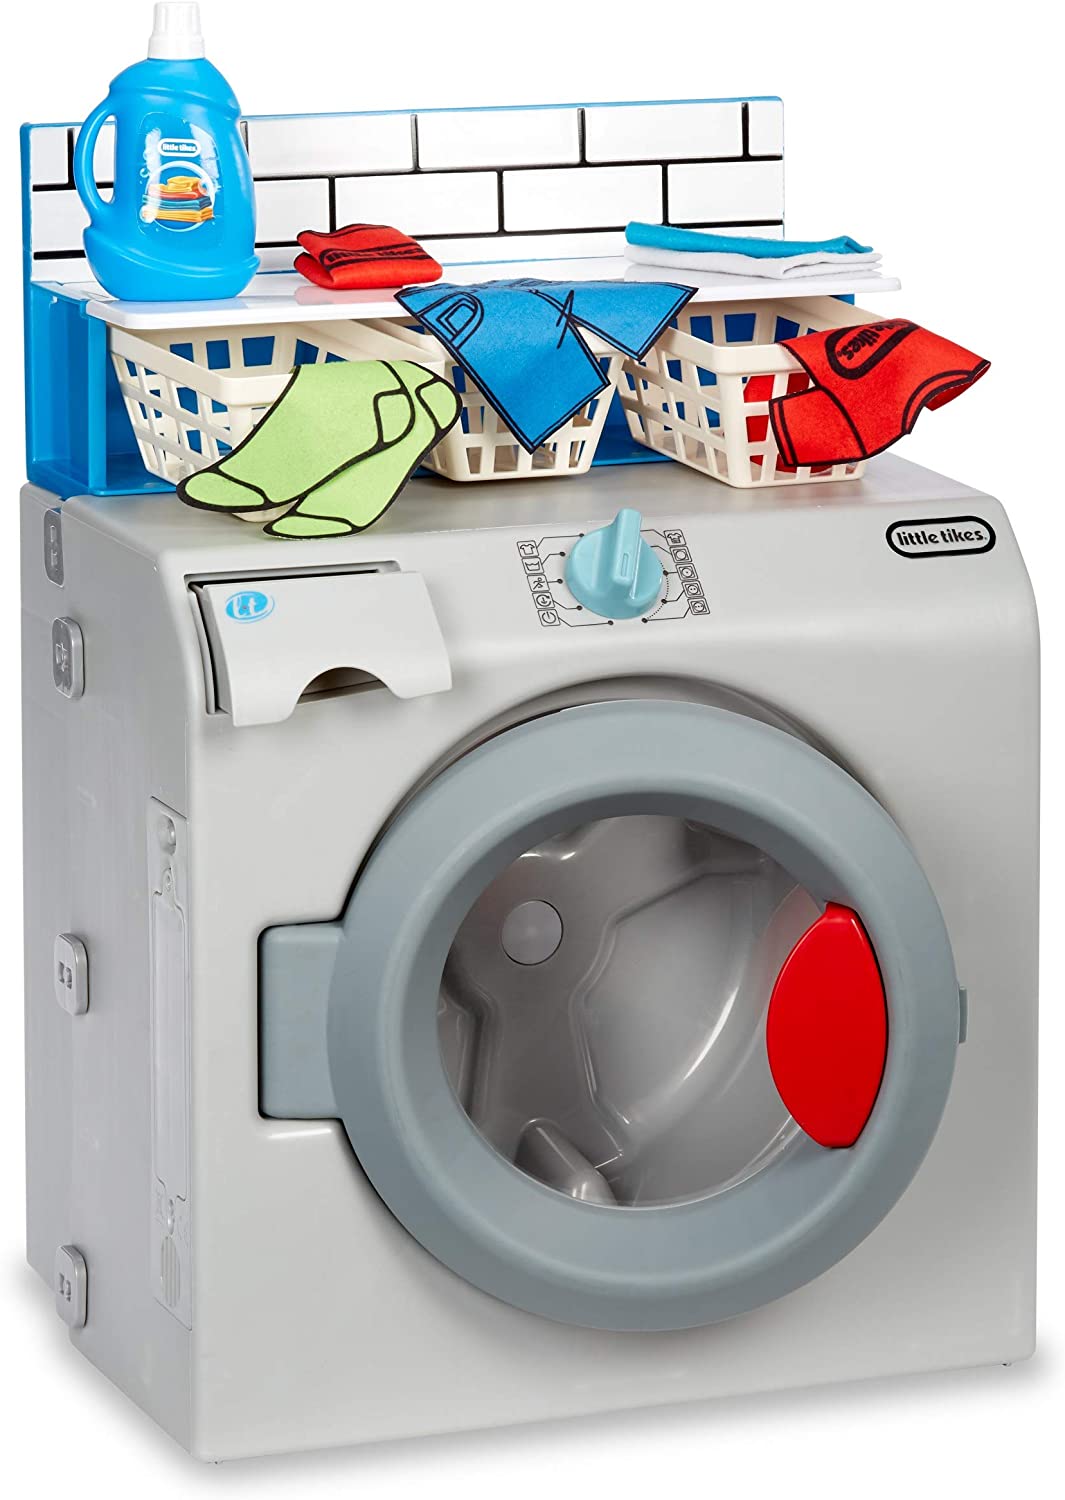 Mini washing machine set.